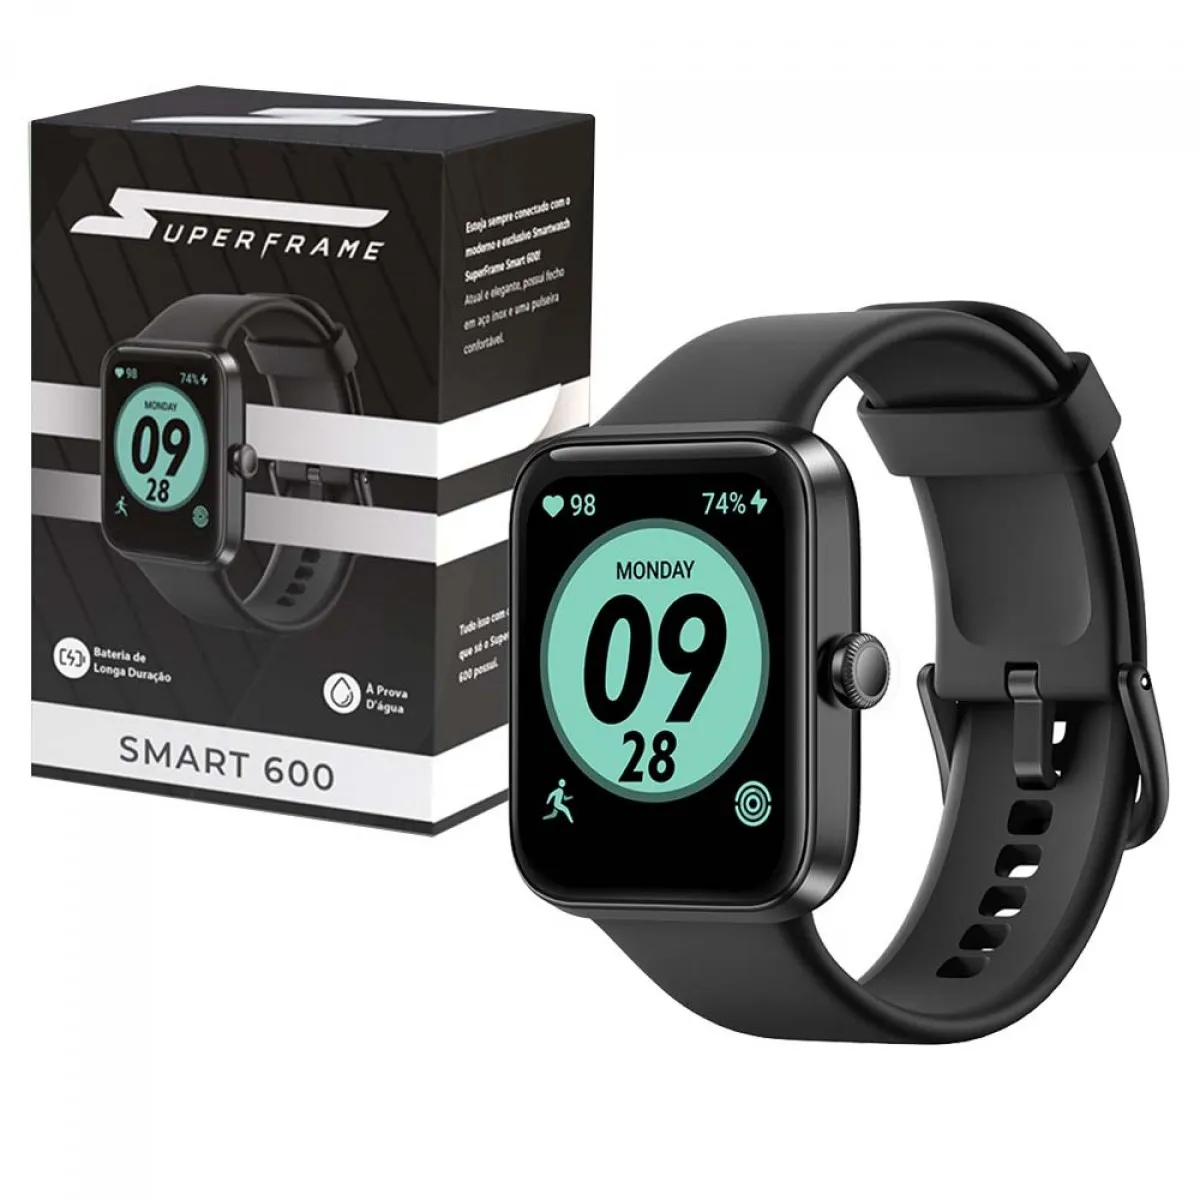 Smartwatch Superframe Smart 600